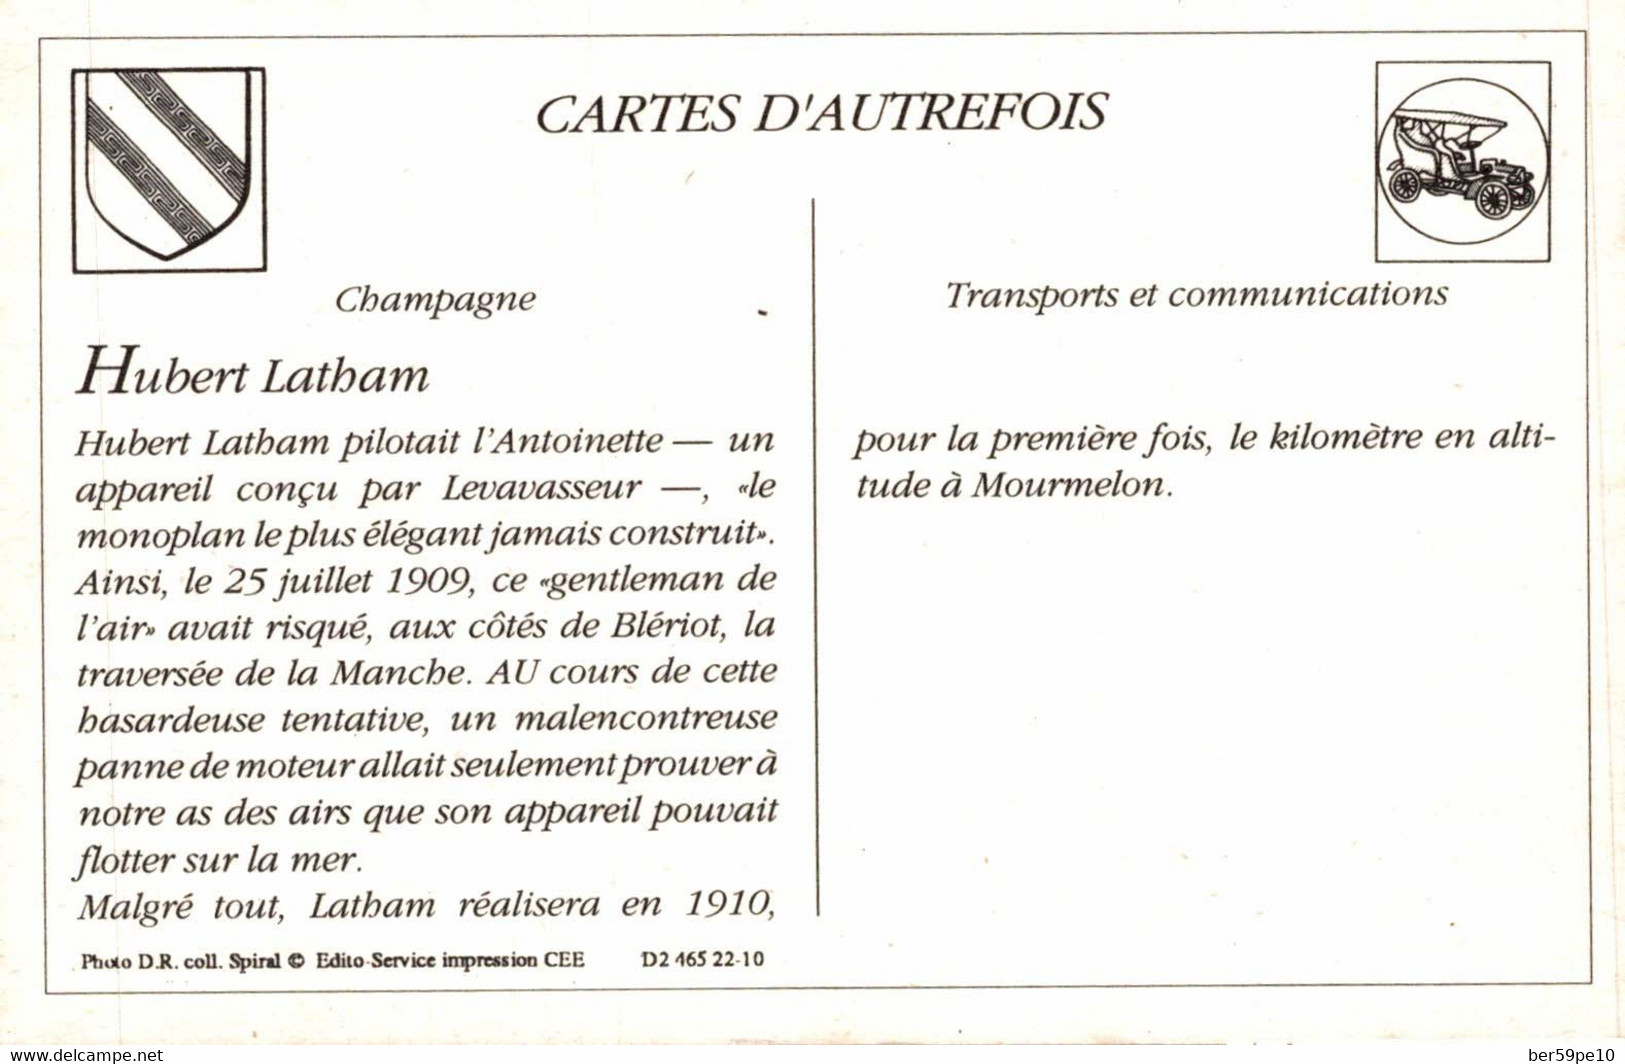 CARTE D'AUTREFOIS TRANSPORTS ET COMMUNICATIONS CHAMPAGNE HUBERT LATHAM - Champagne - Ardenne